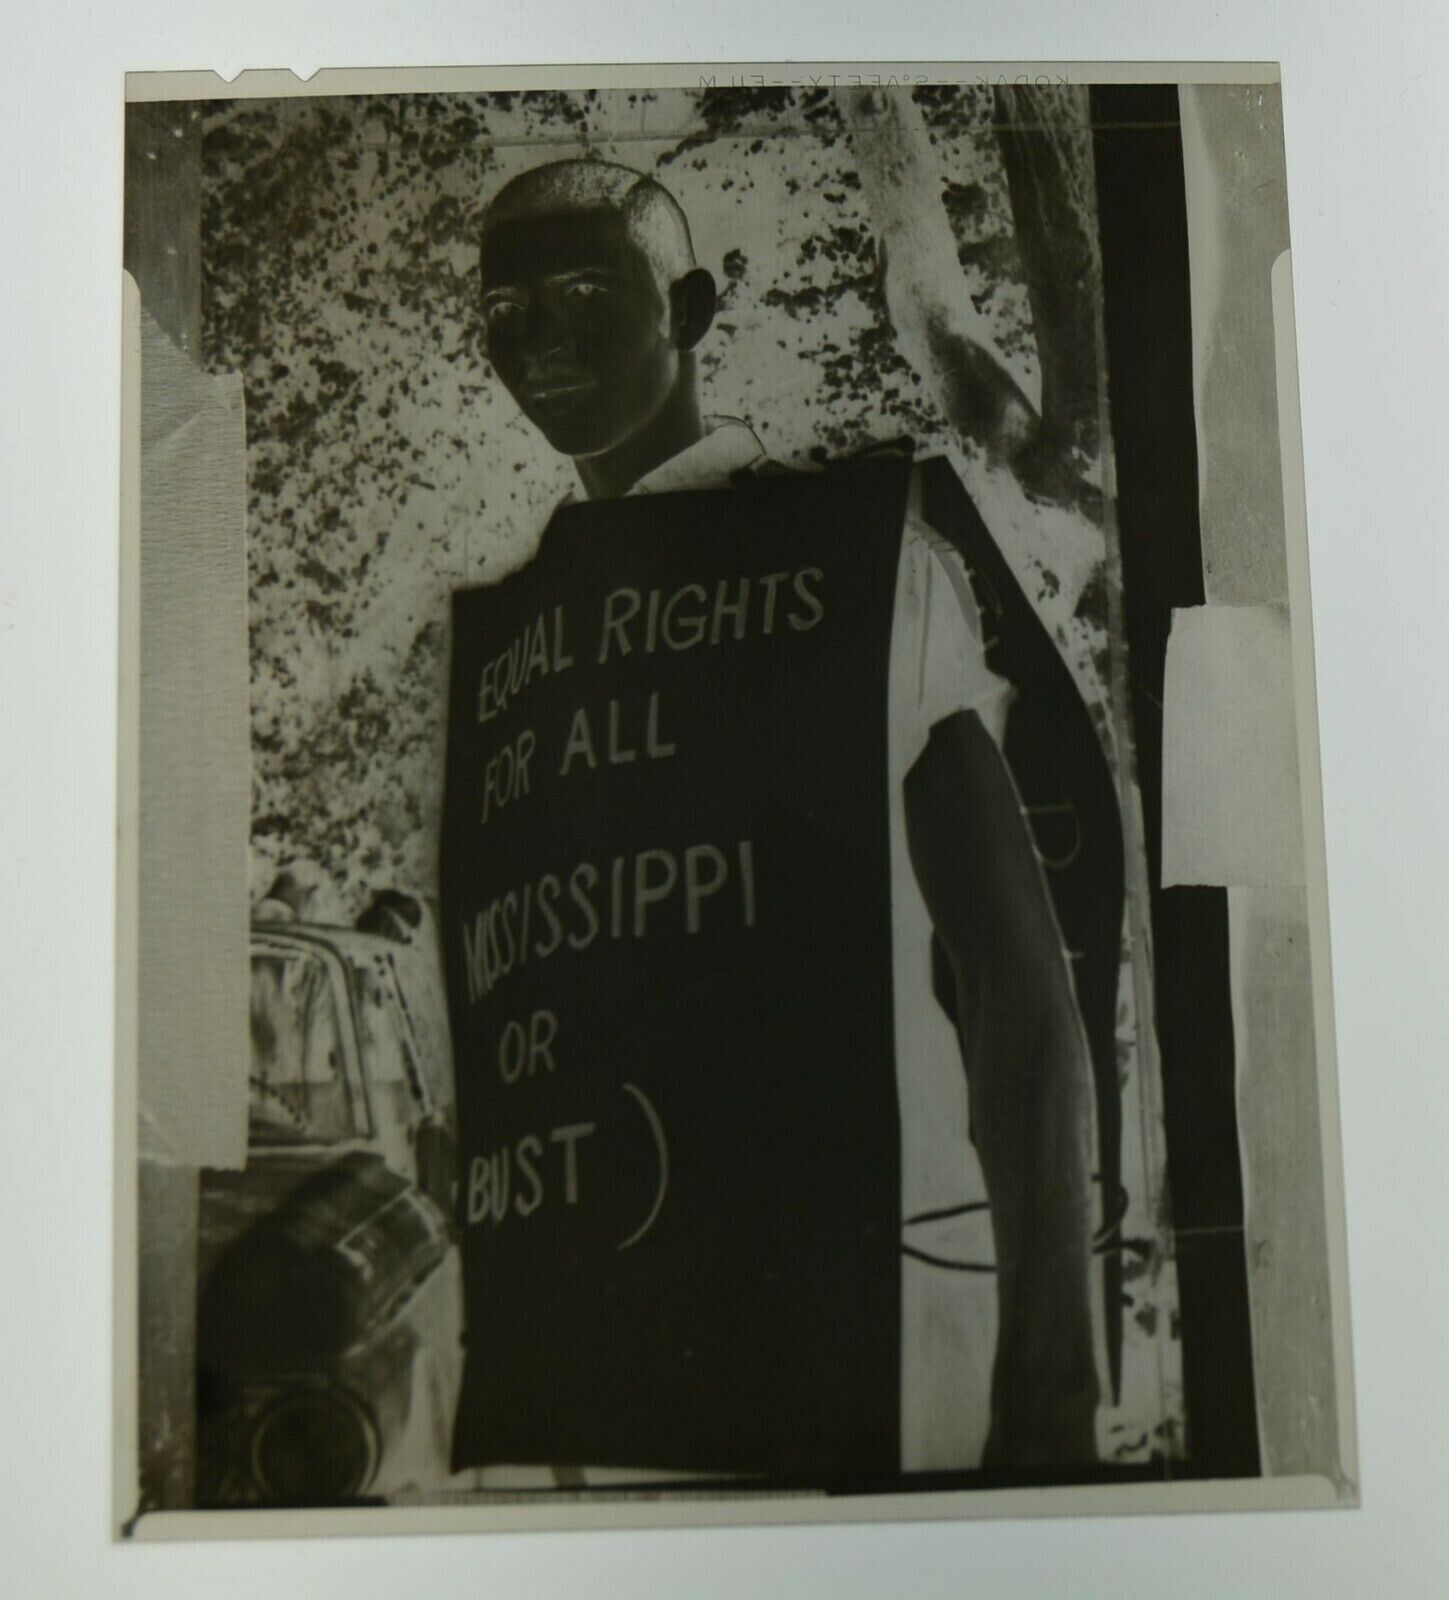 SNCC CIVIL RIGHTS CARVER NEBLETT ORIGINAL AFRICAN AMERICAN ARTIST PHOTOGRAPHER 